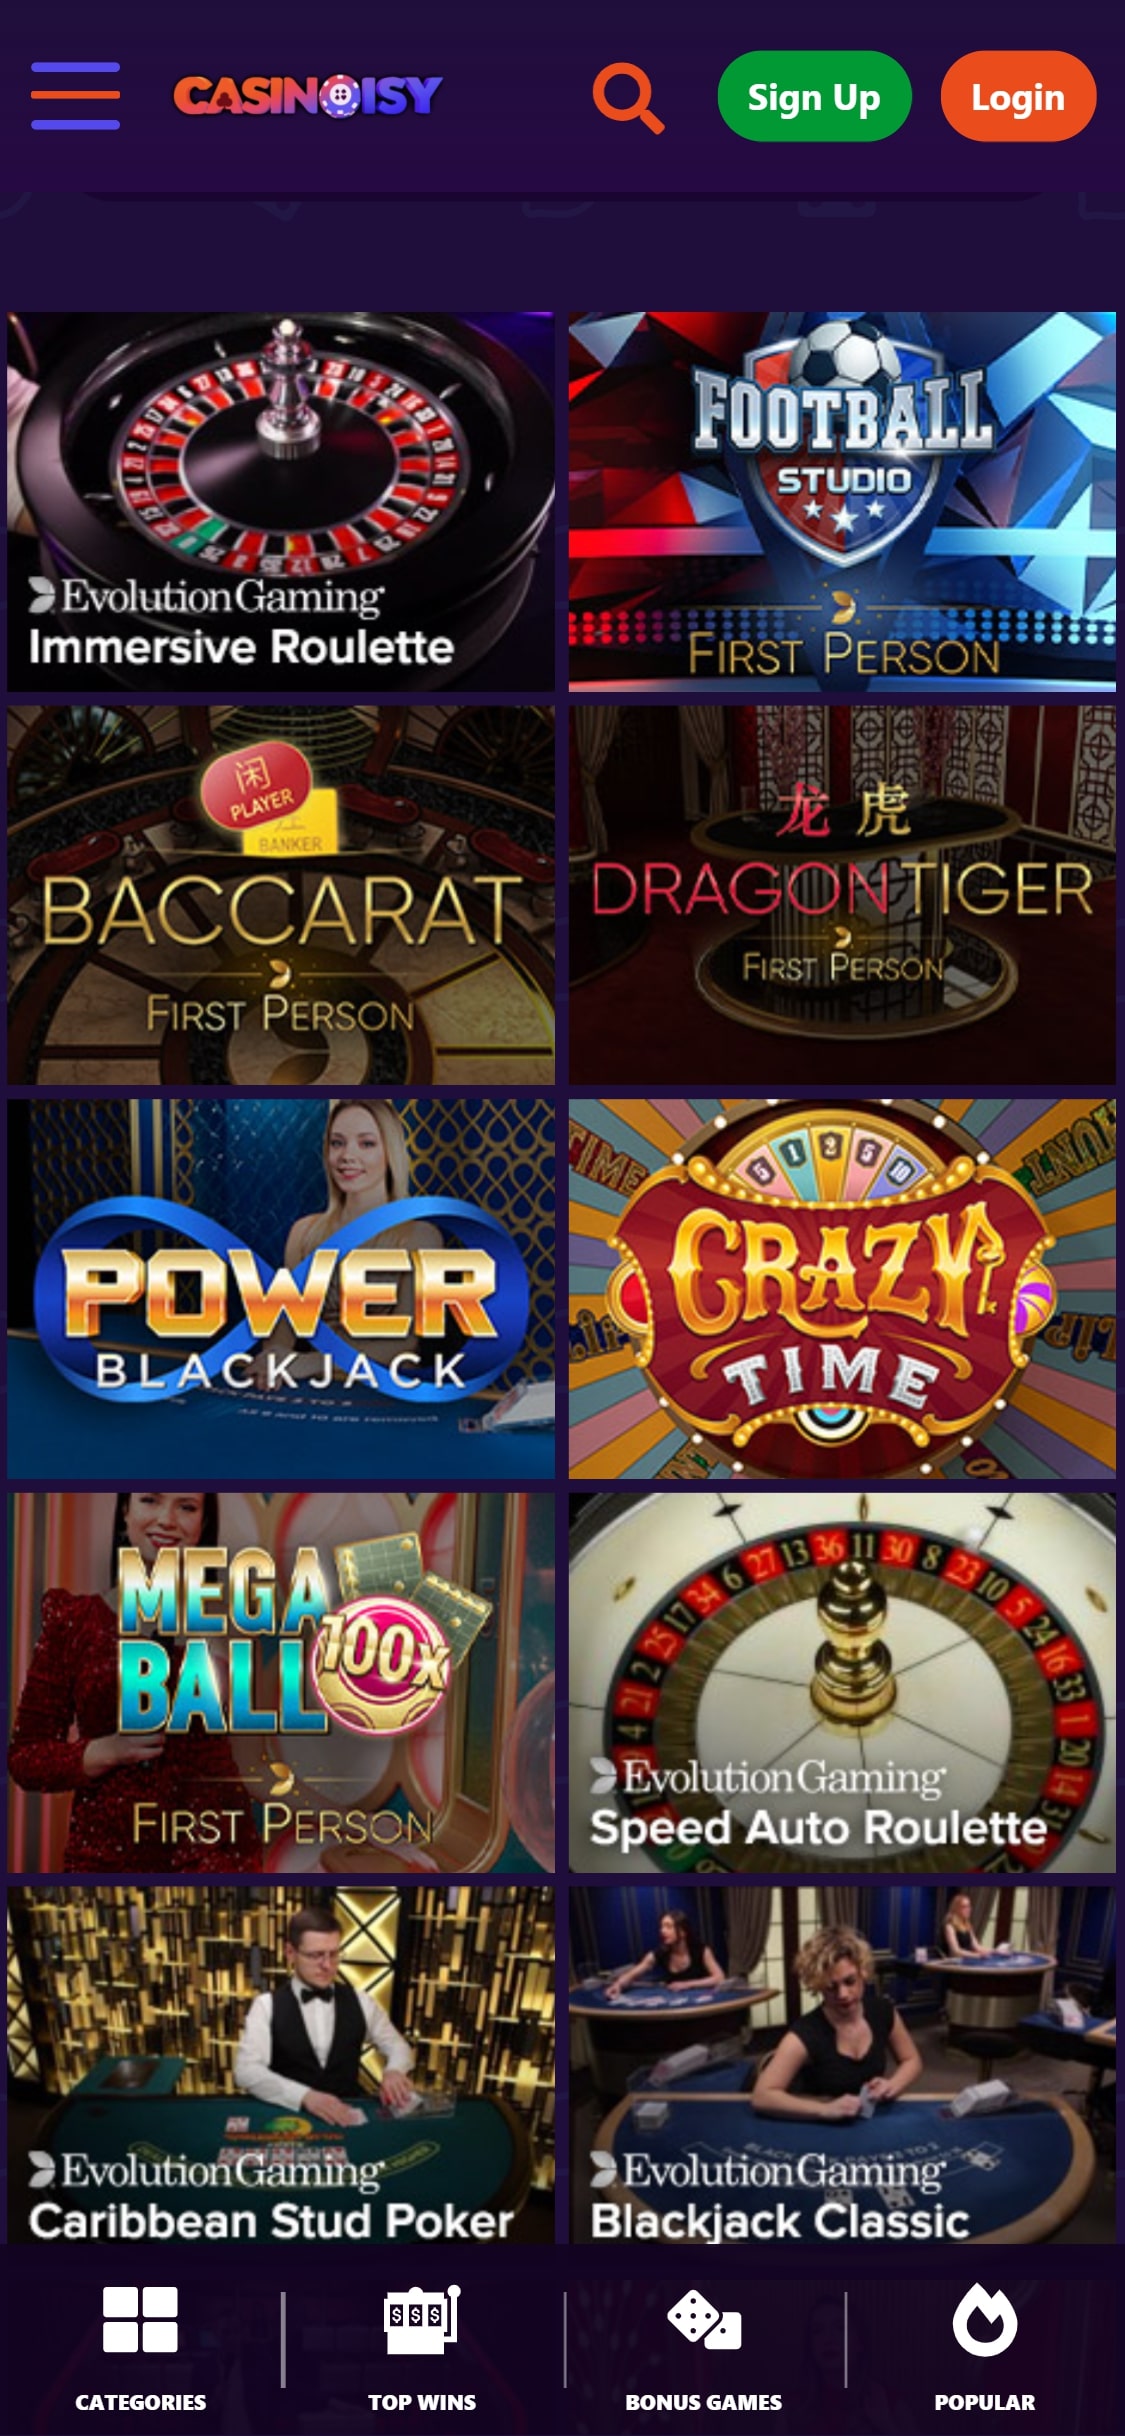 Casinoisy casino Mobile Live Dealer Games Review